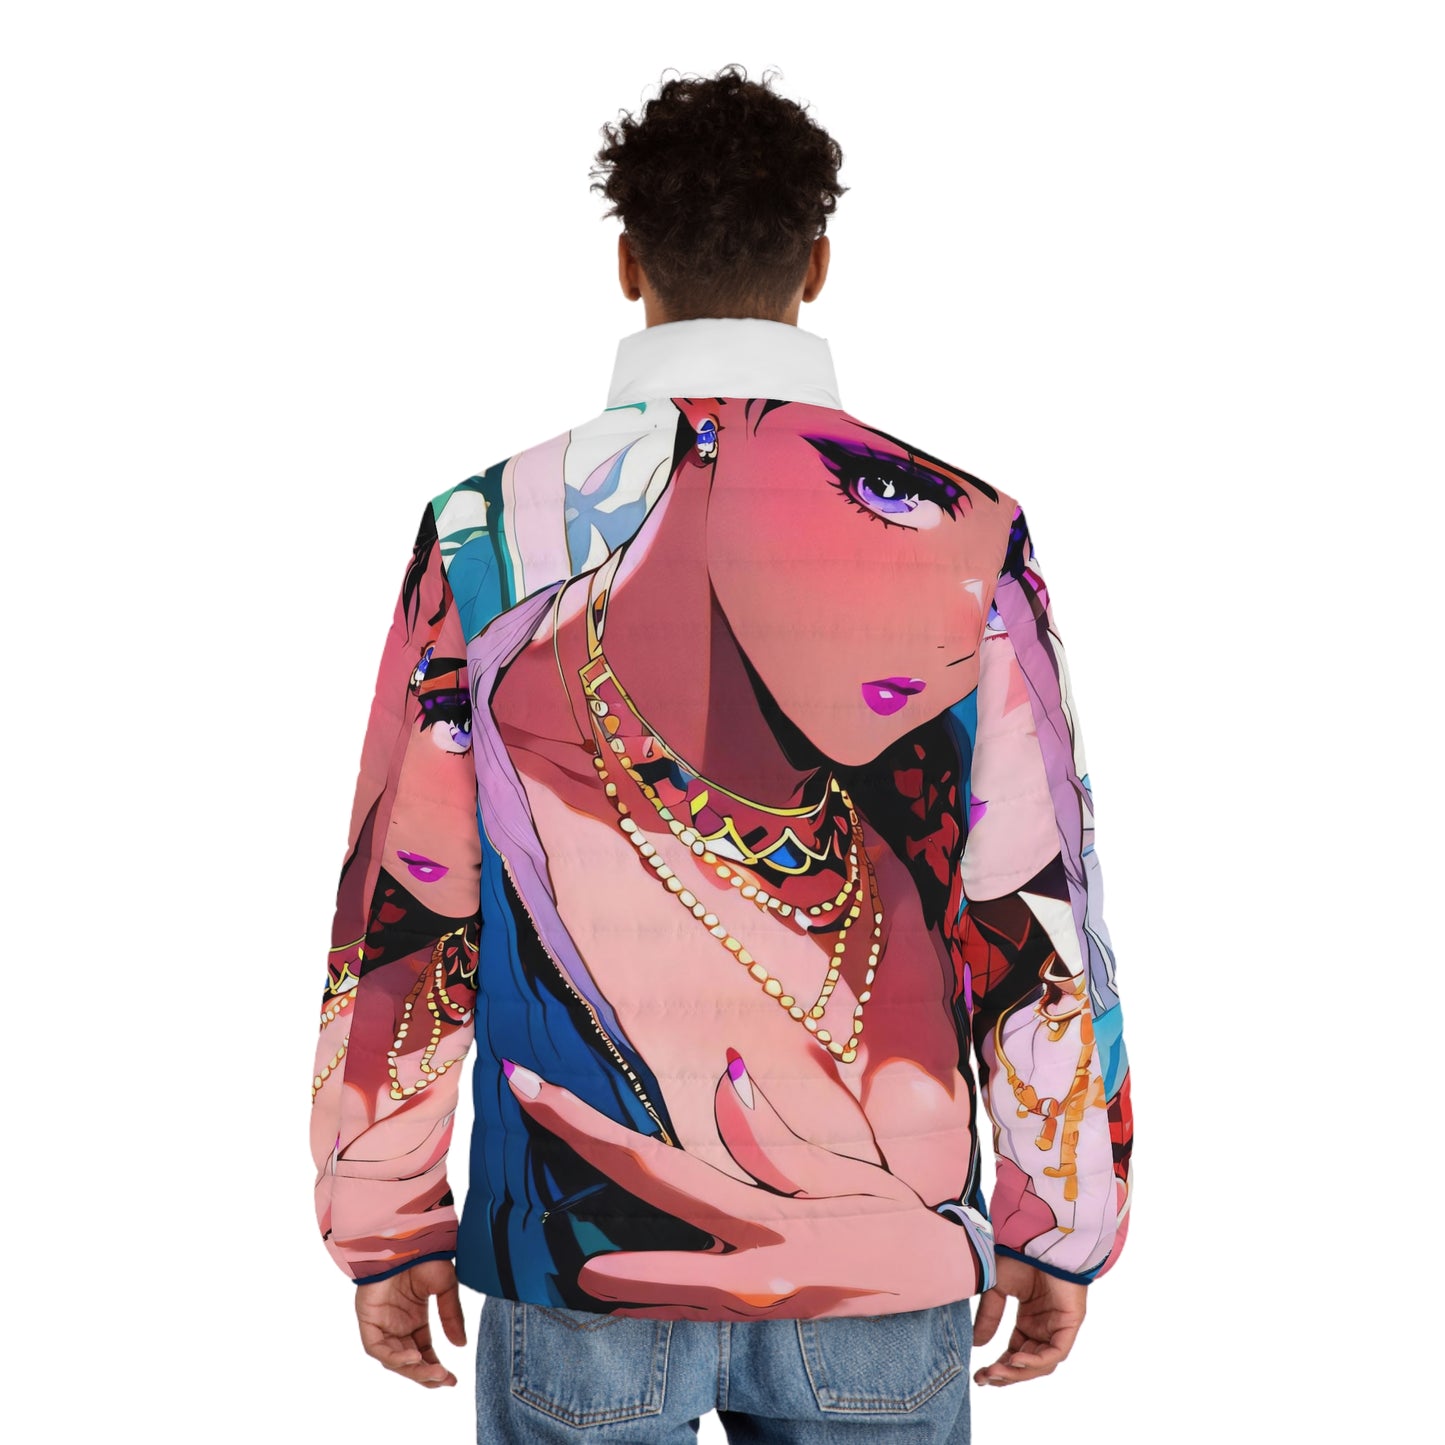 Anime Style Art Men's Puffer Jacket (AOP)- "Maniac"